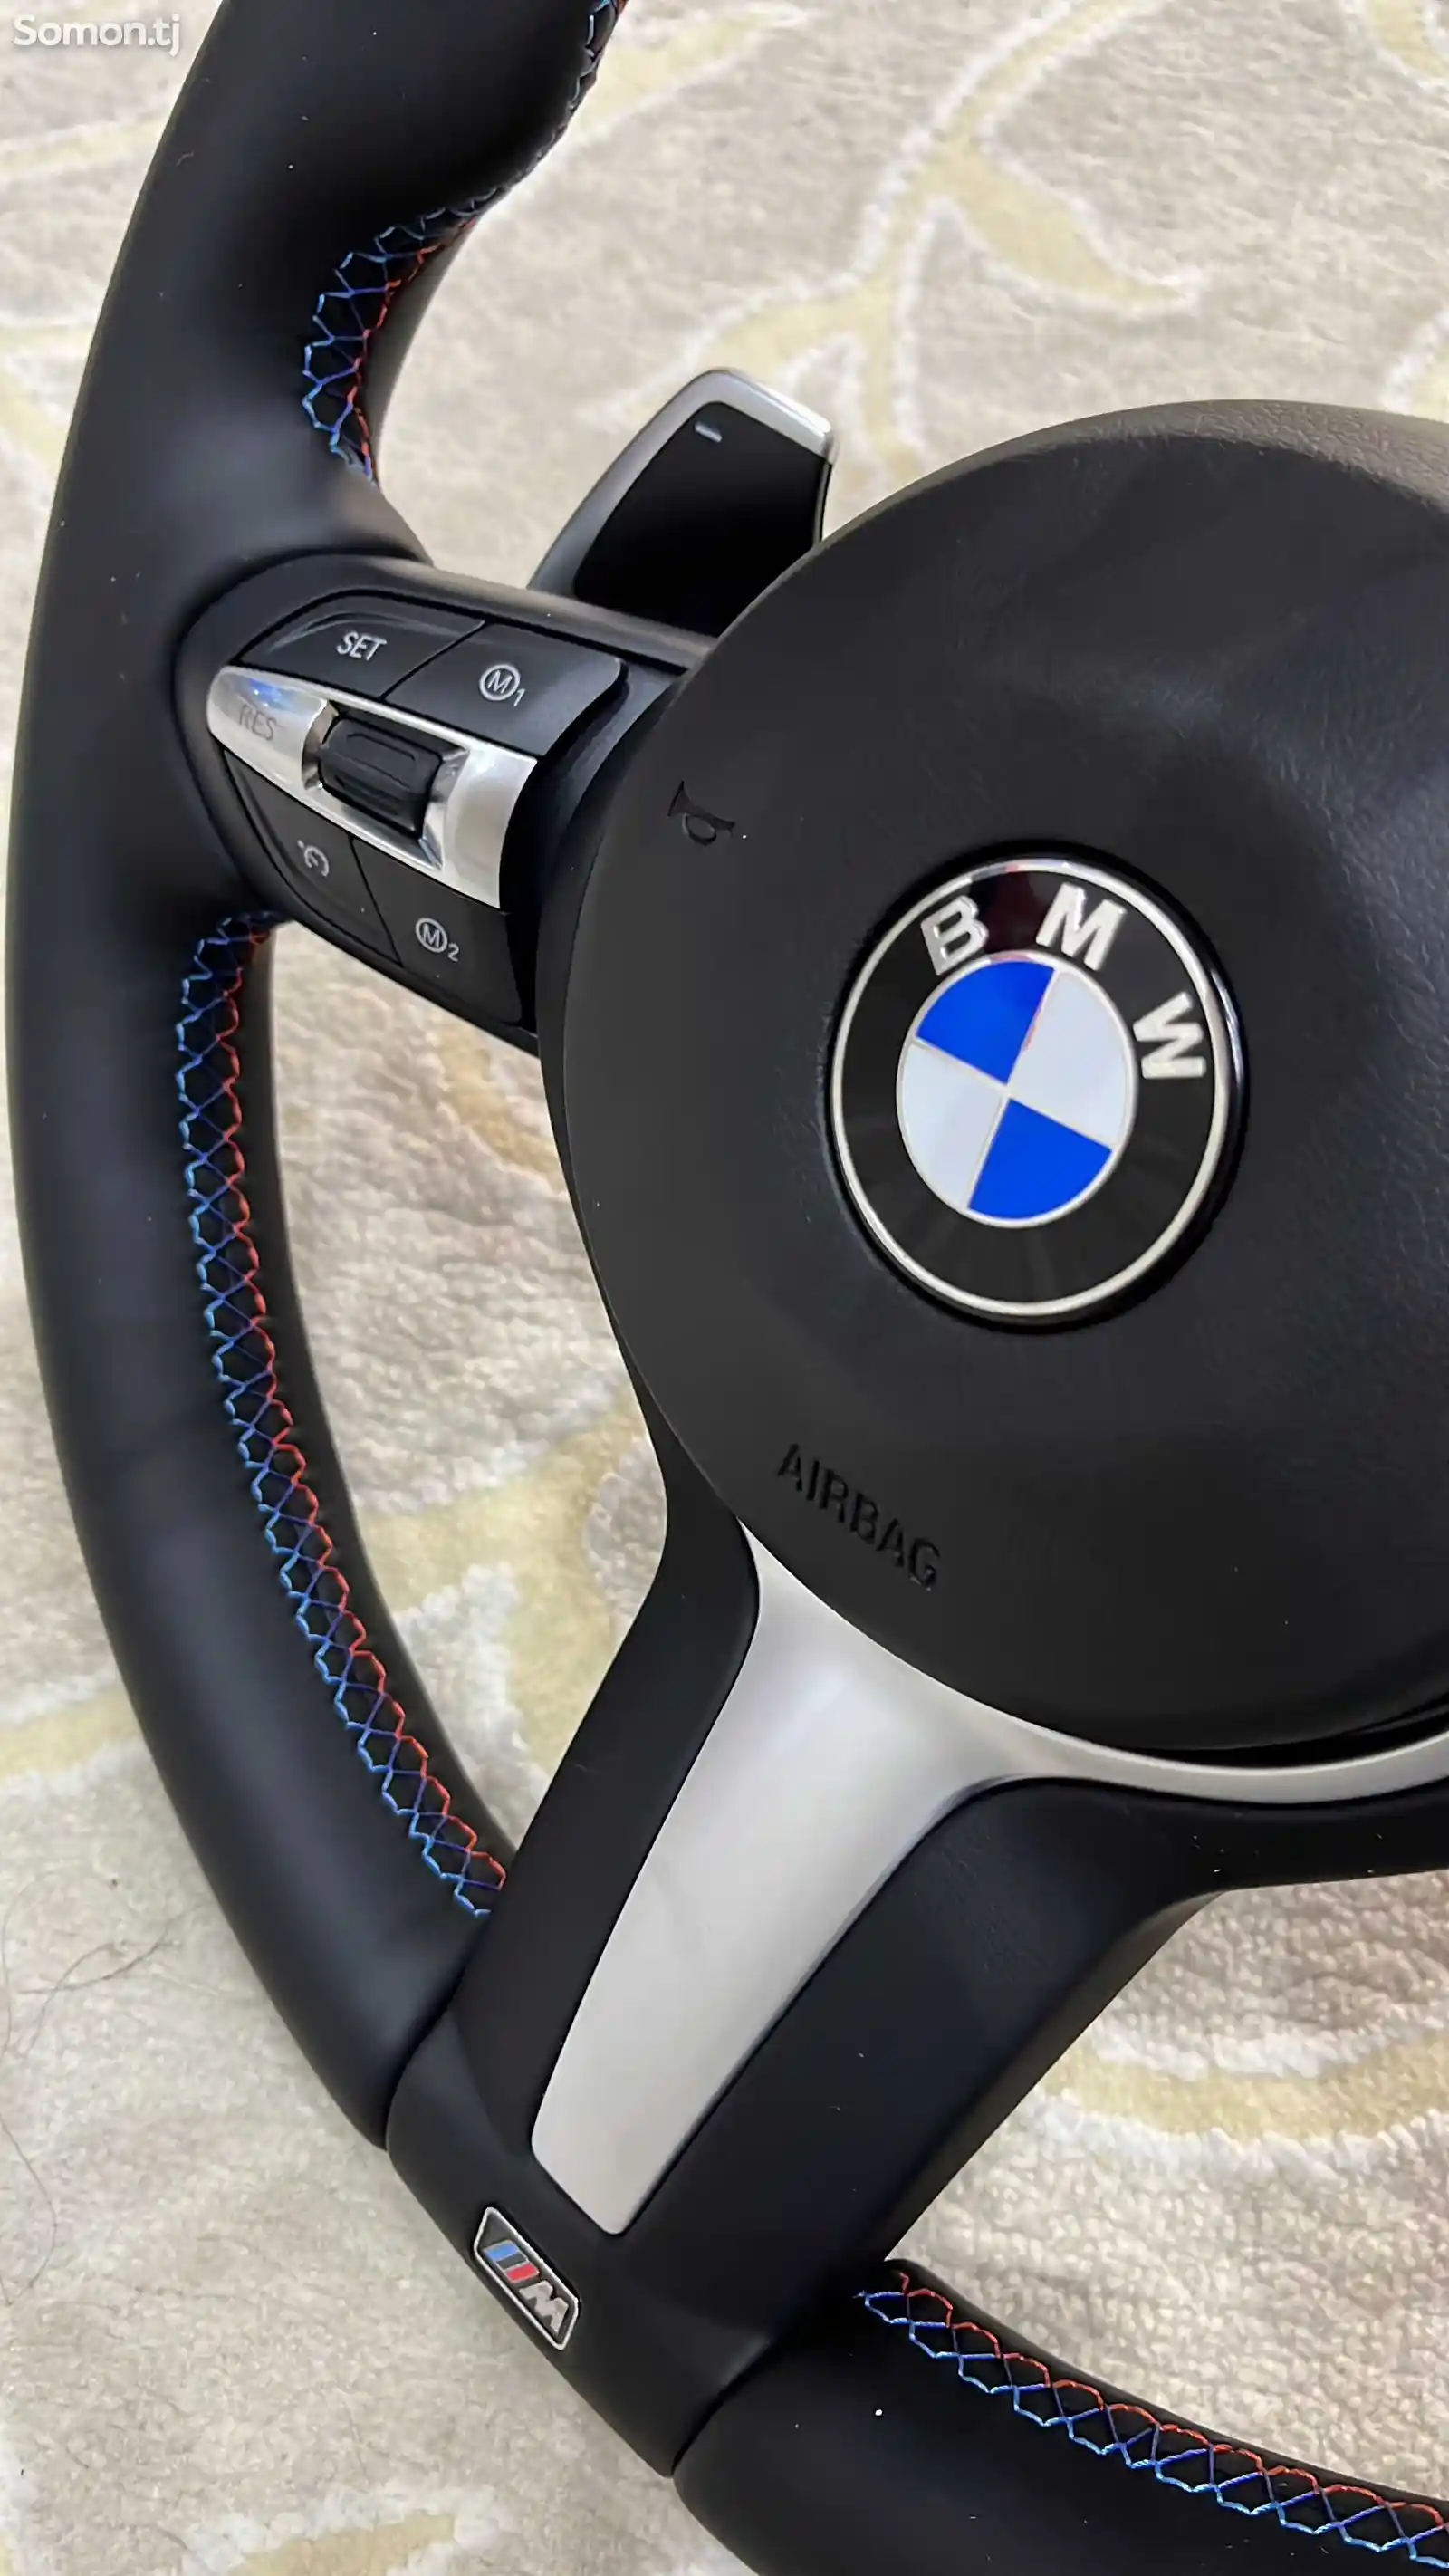 Руль от BMW F10-2